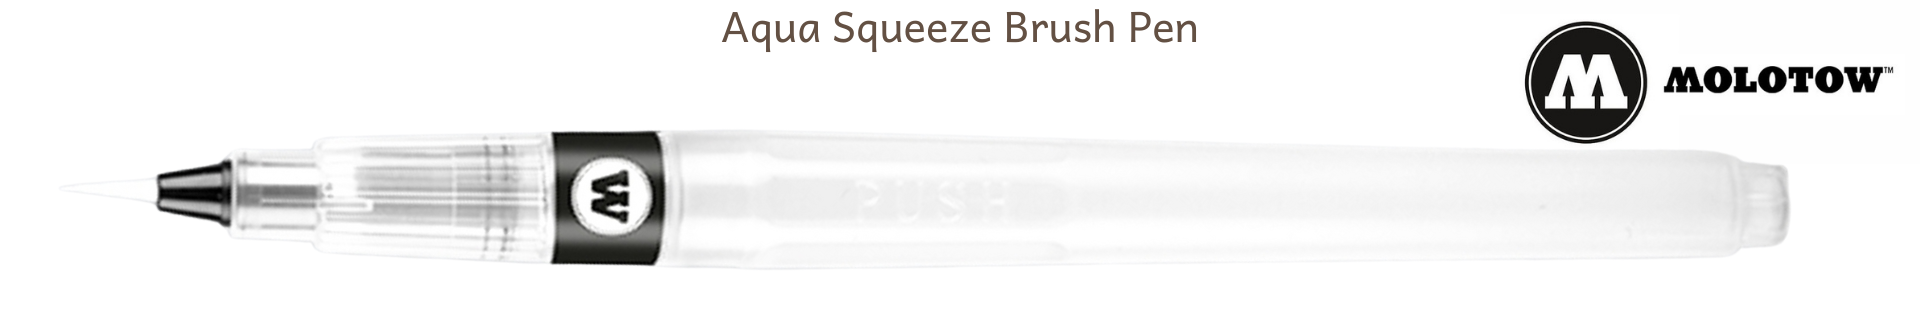 Molotow Aqua Squeeze Brush Pen